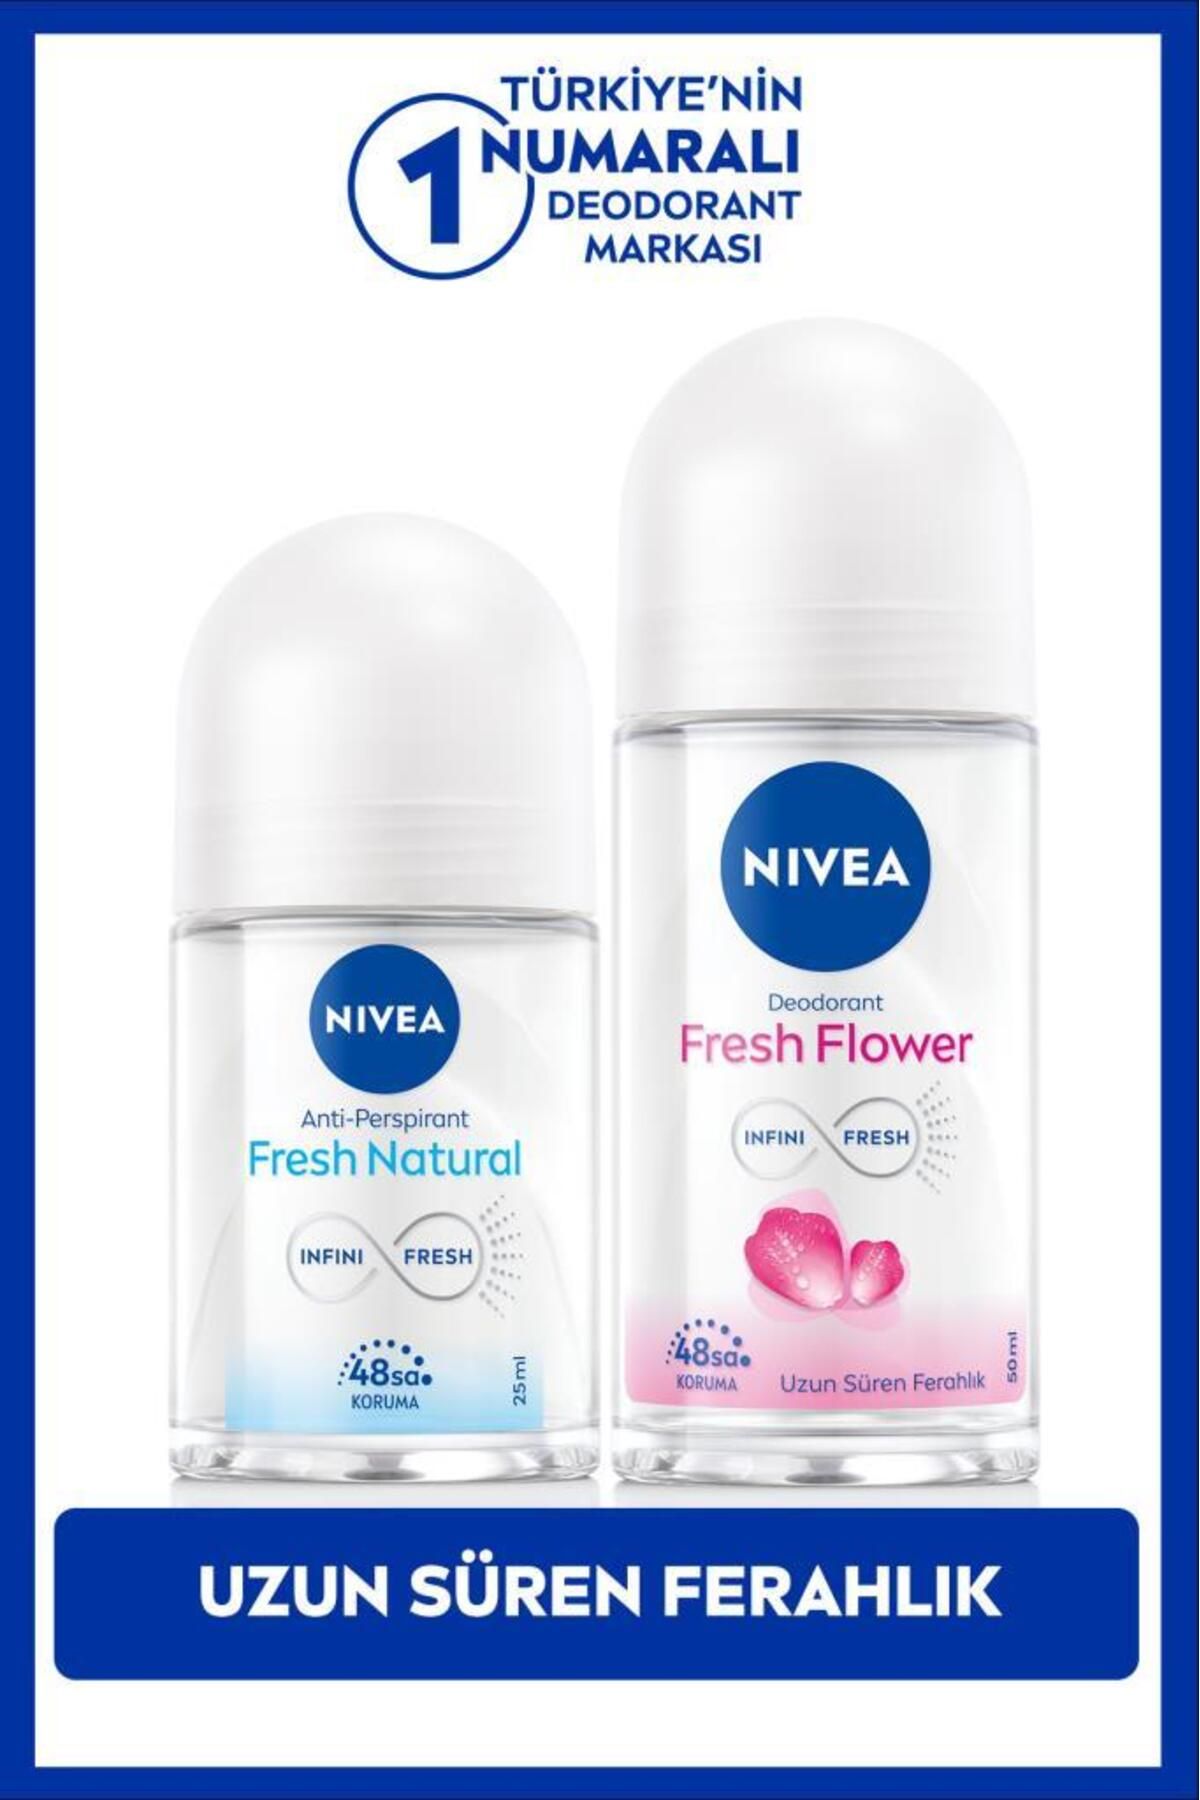 NIVEA Kadın Roll-on Deodorant Fresh Flower 50ml ve Mini Roll-on Fresh Natural 25ml, 48 Saat Koruma